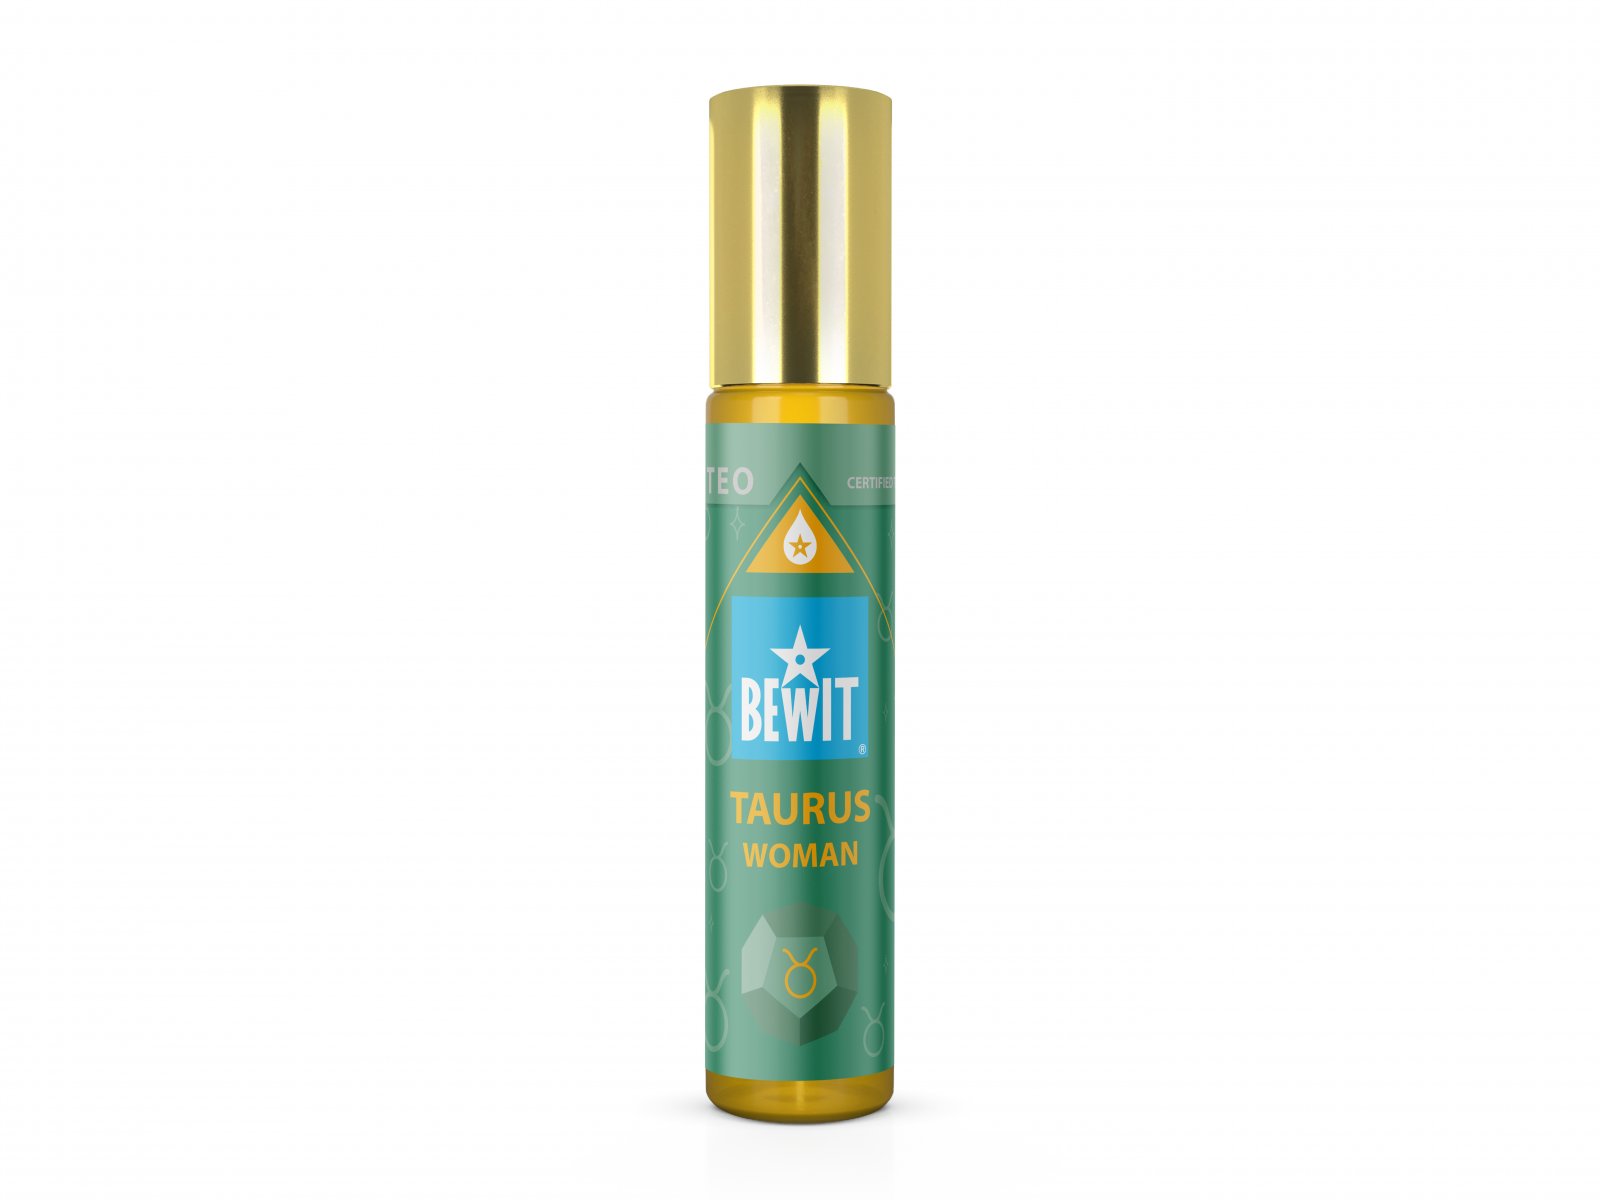 BEWIT WOMAN TAURUS (BULL) - Women's roll-on oil perfume